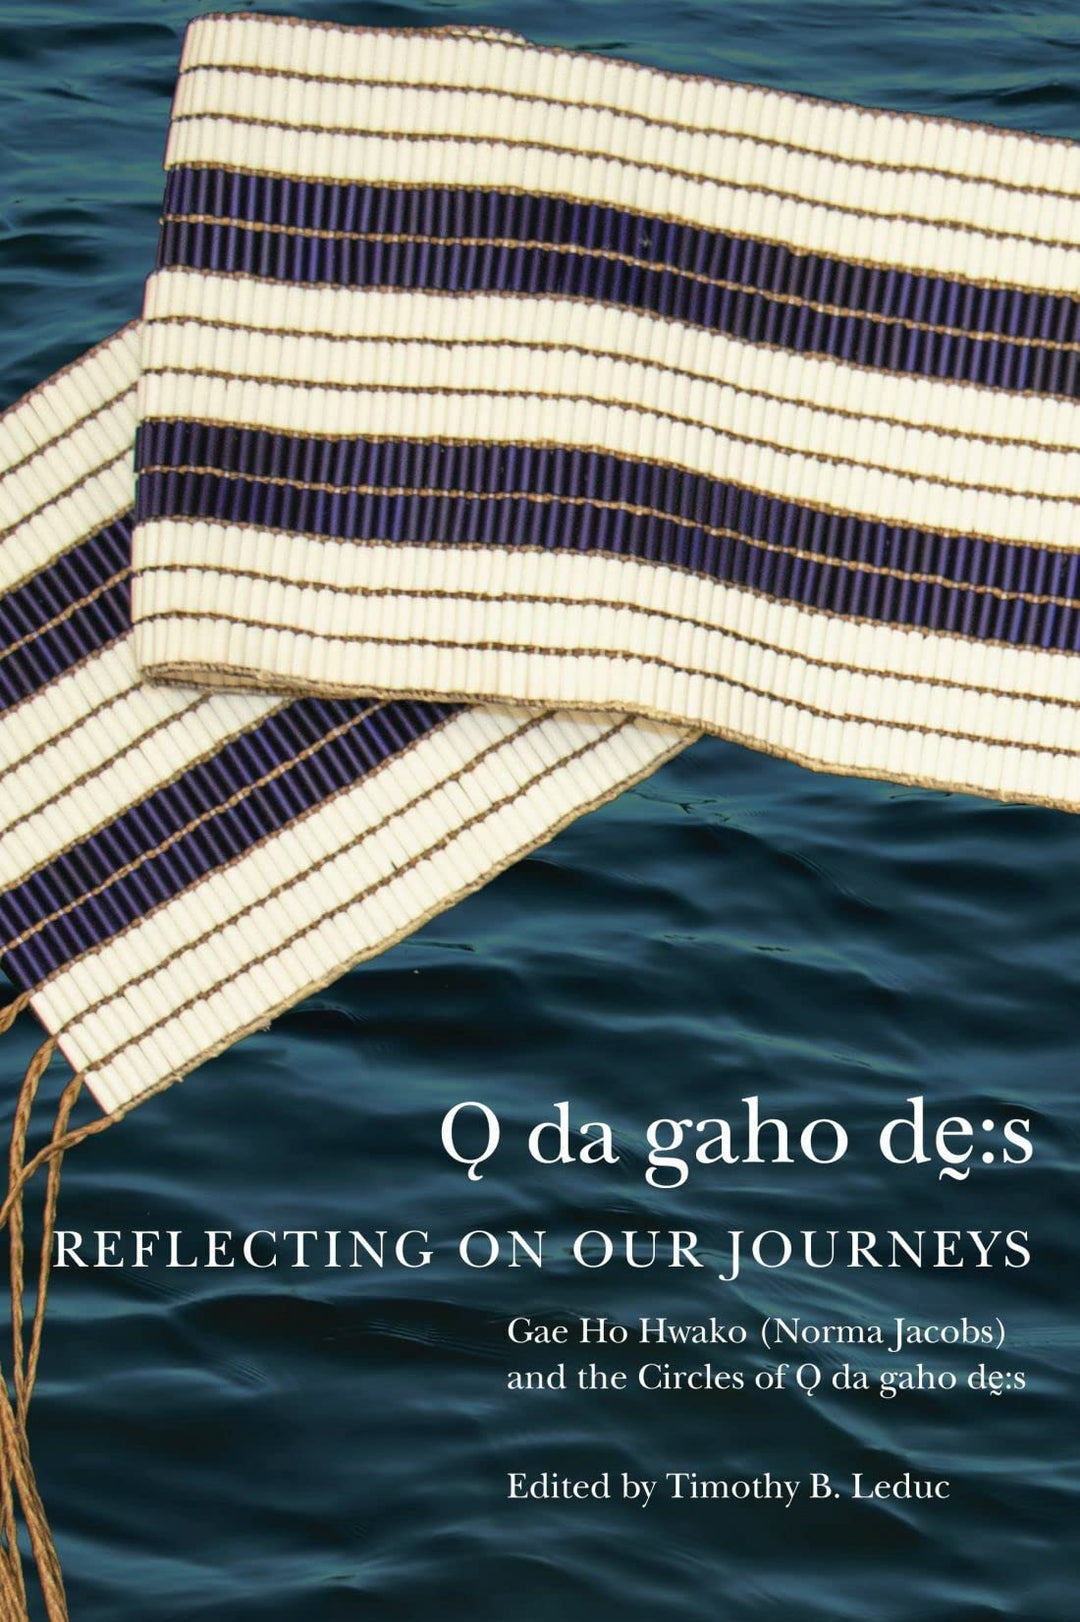 Odagahodhes: Reflecting on Our Journeys by Gae Ho Hwako